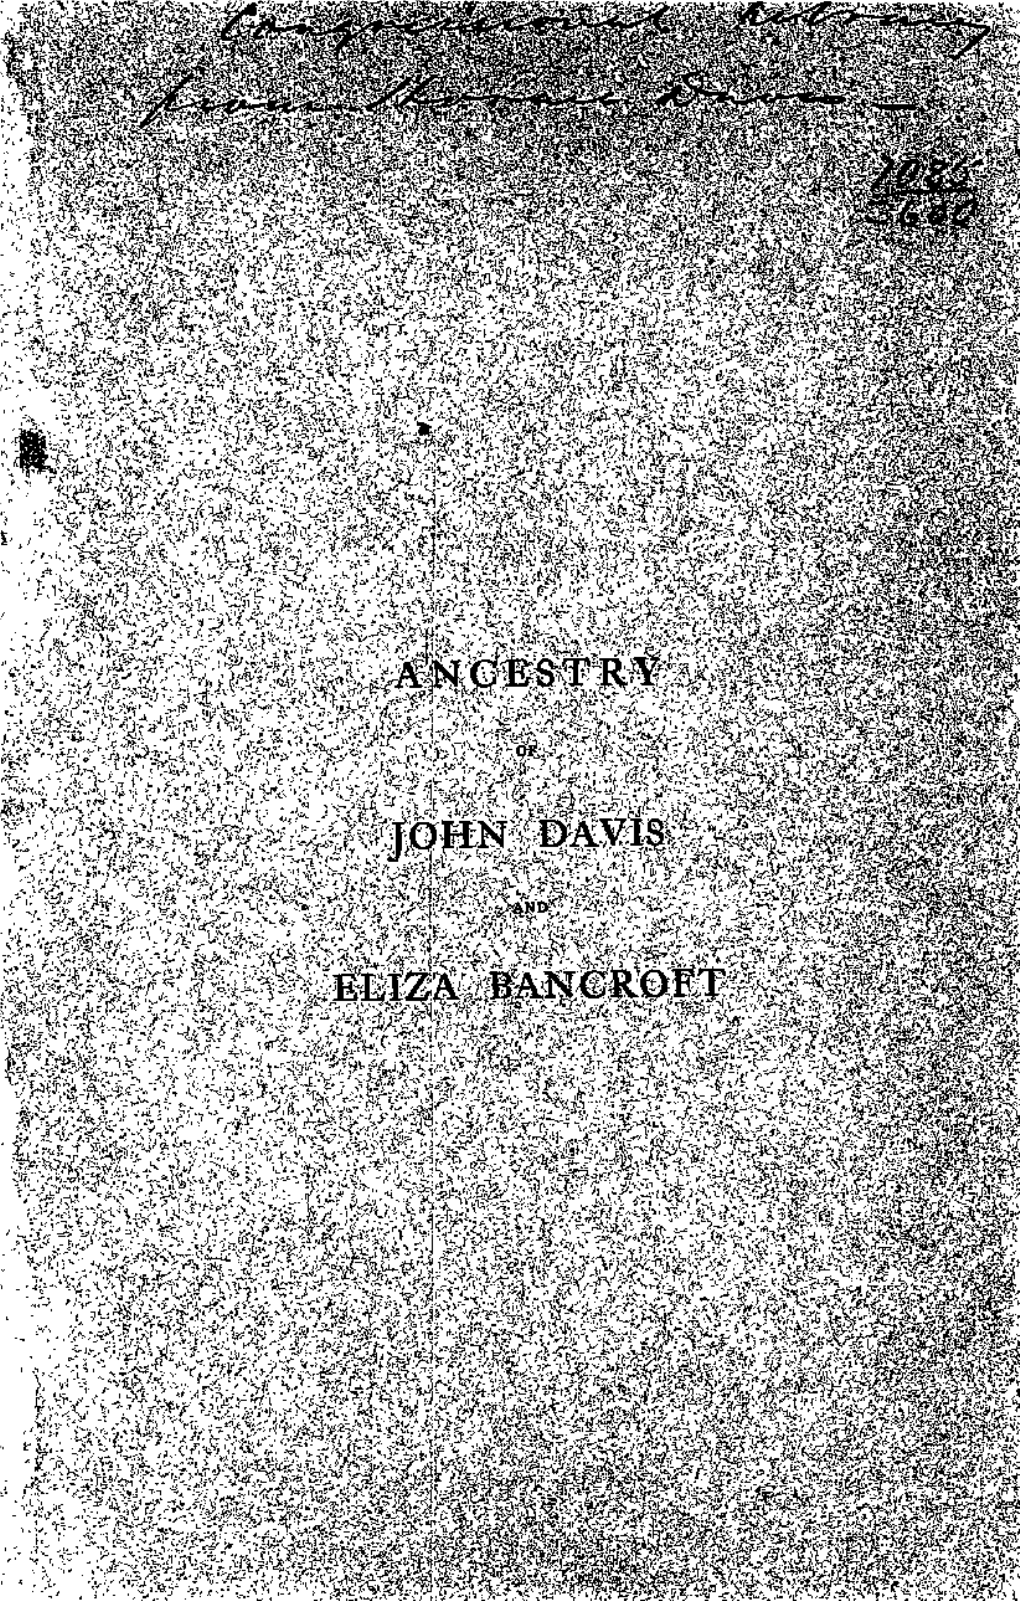 Ancestry of John Davis, Governor and US Senator and Eliza Bancroft, His